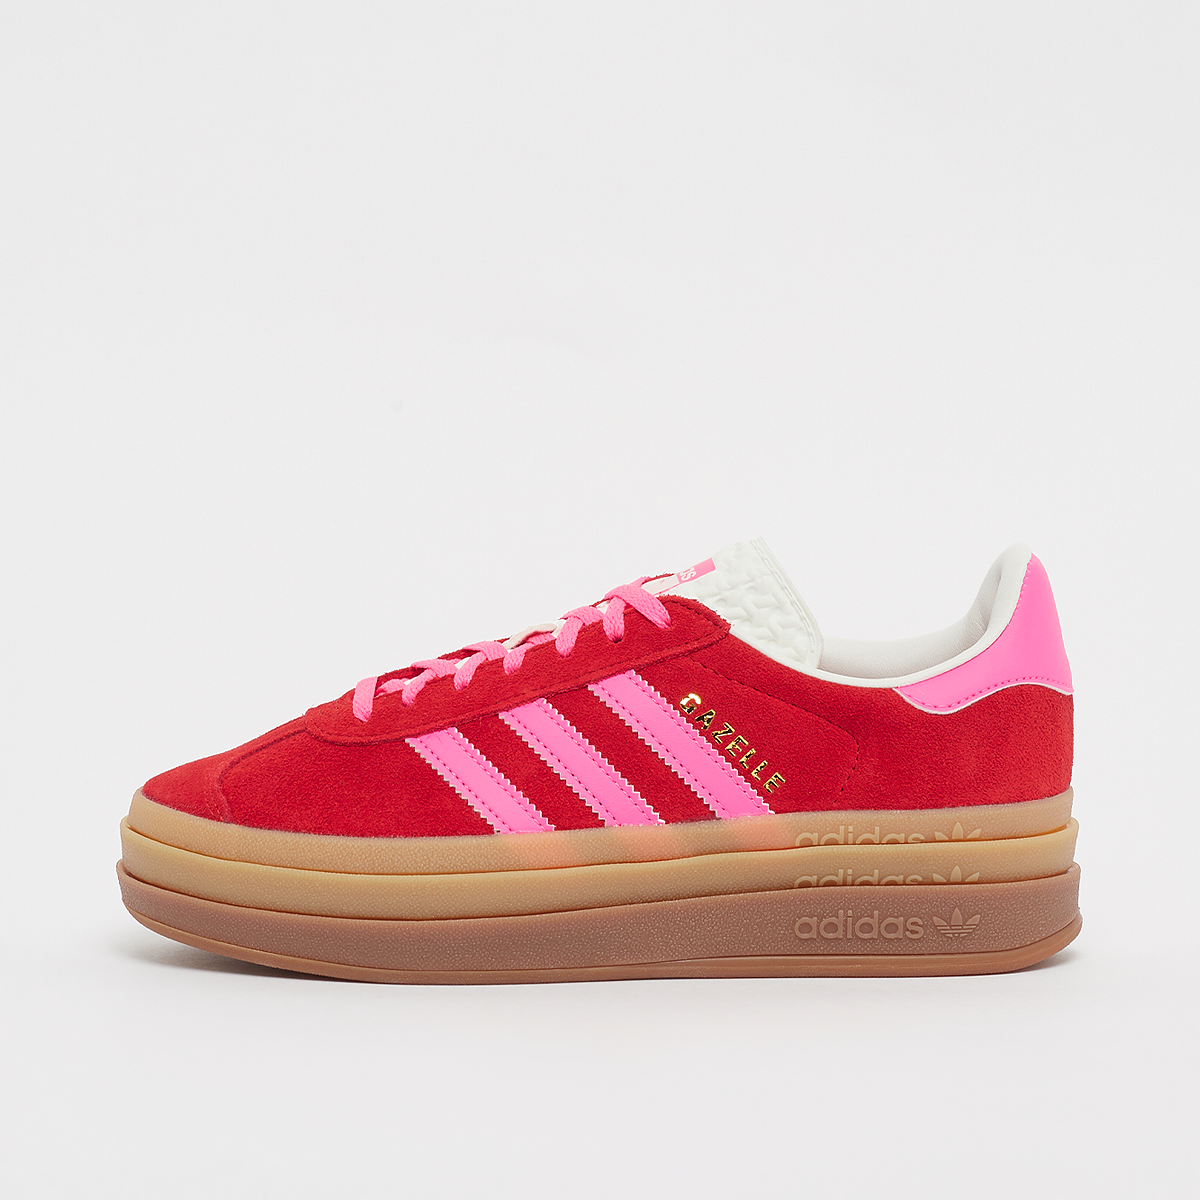 Sneaker Gazelle Bold W, adidas Originals, Footwear, collegiate red/lucid pink/core white, taille: 36 2/3